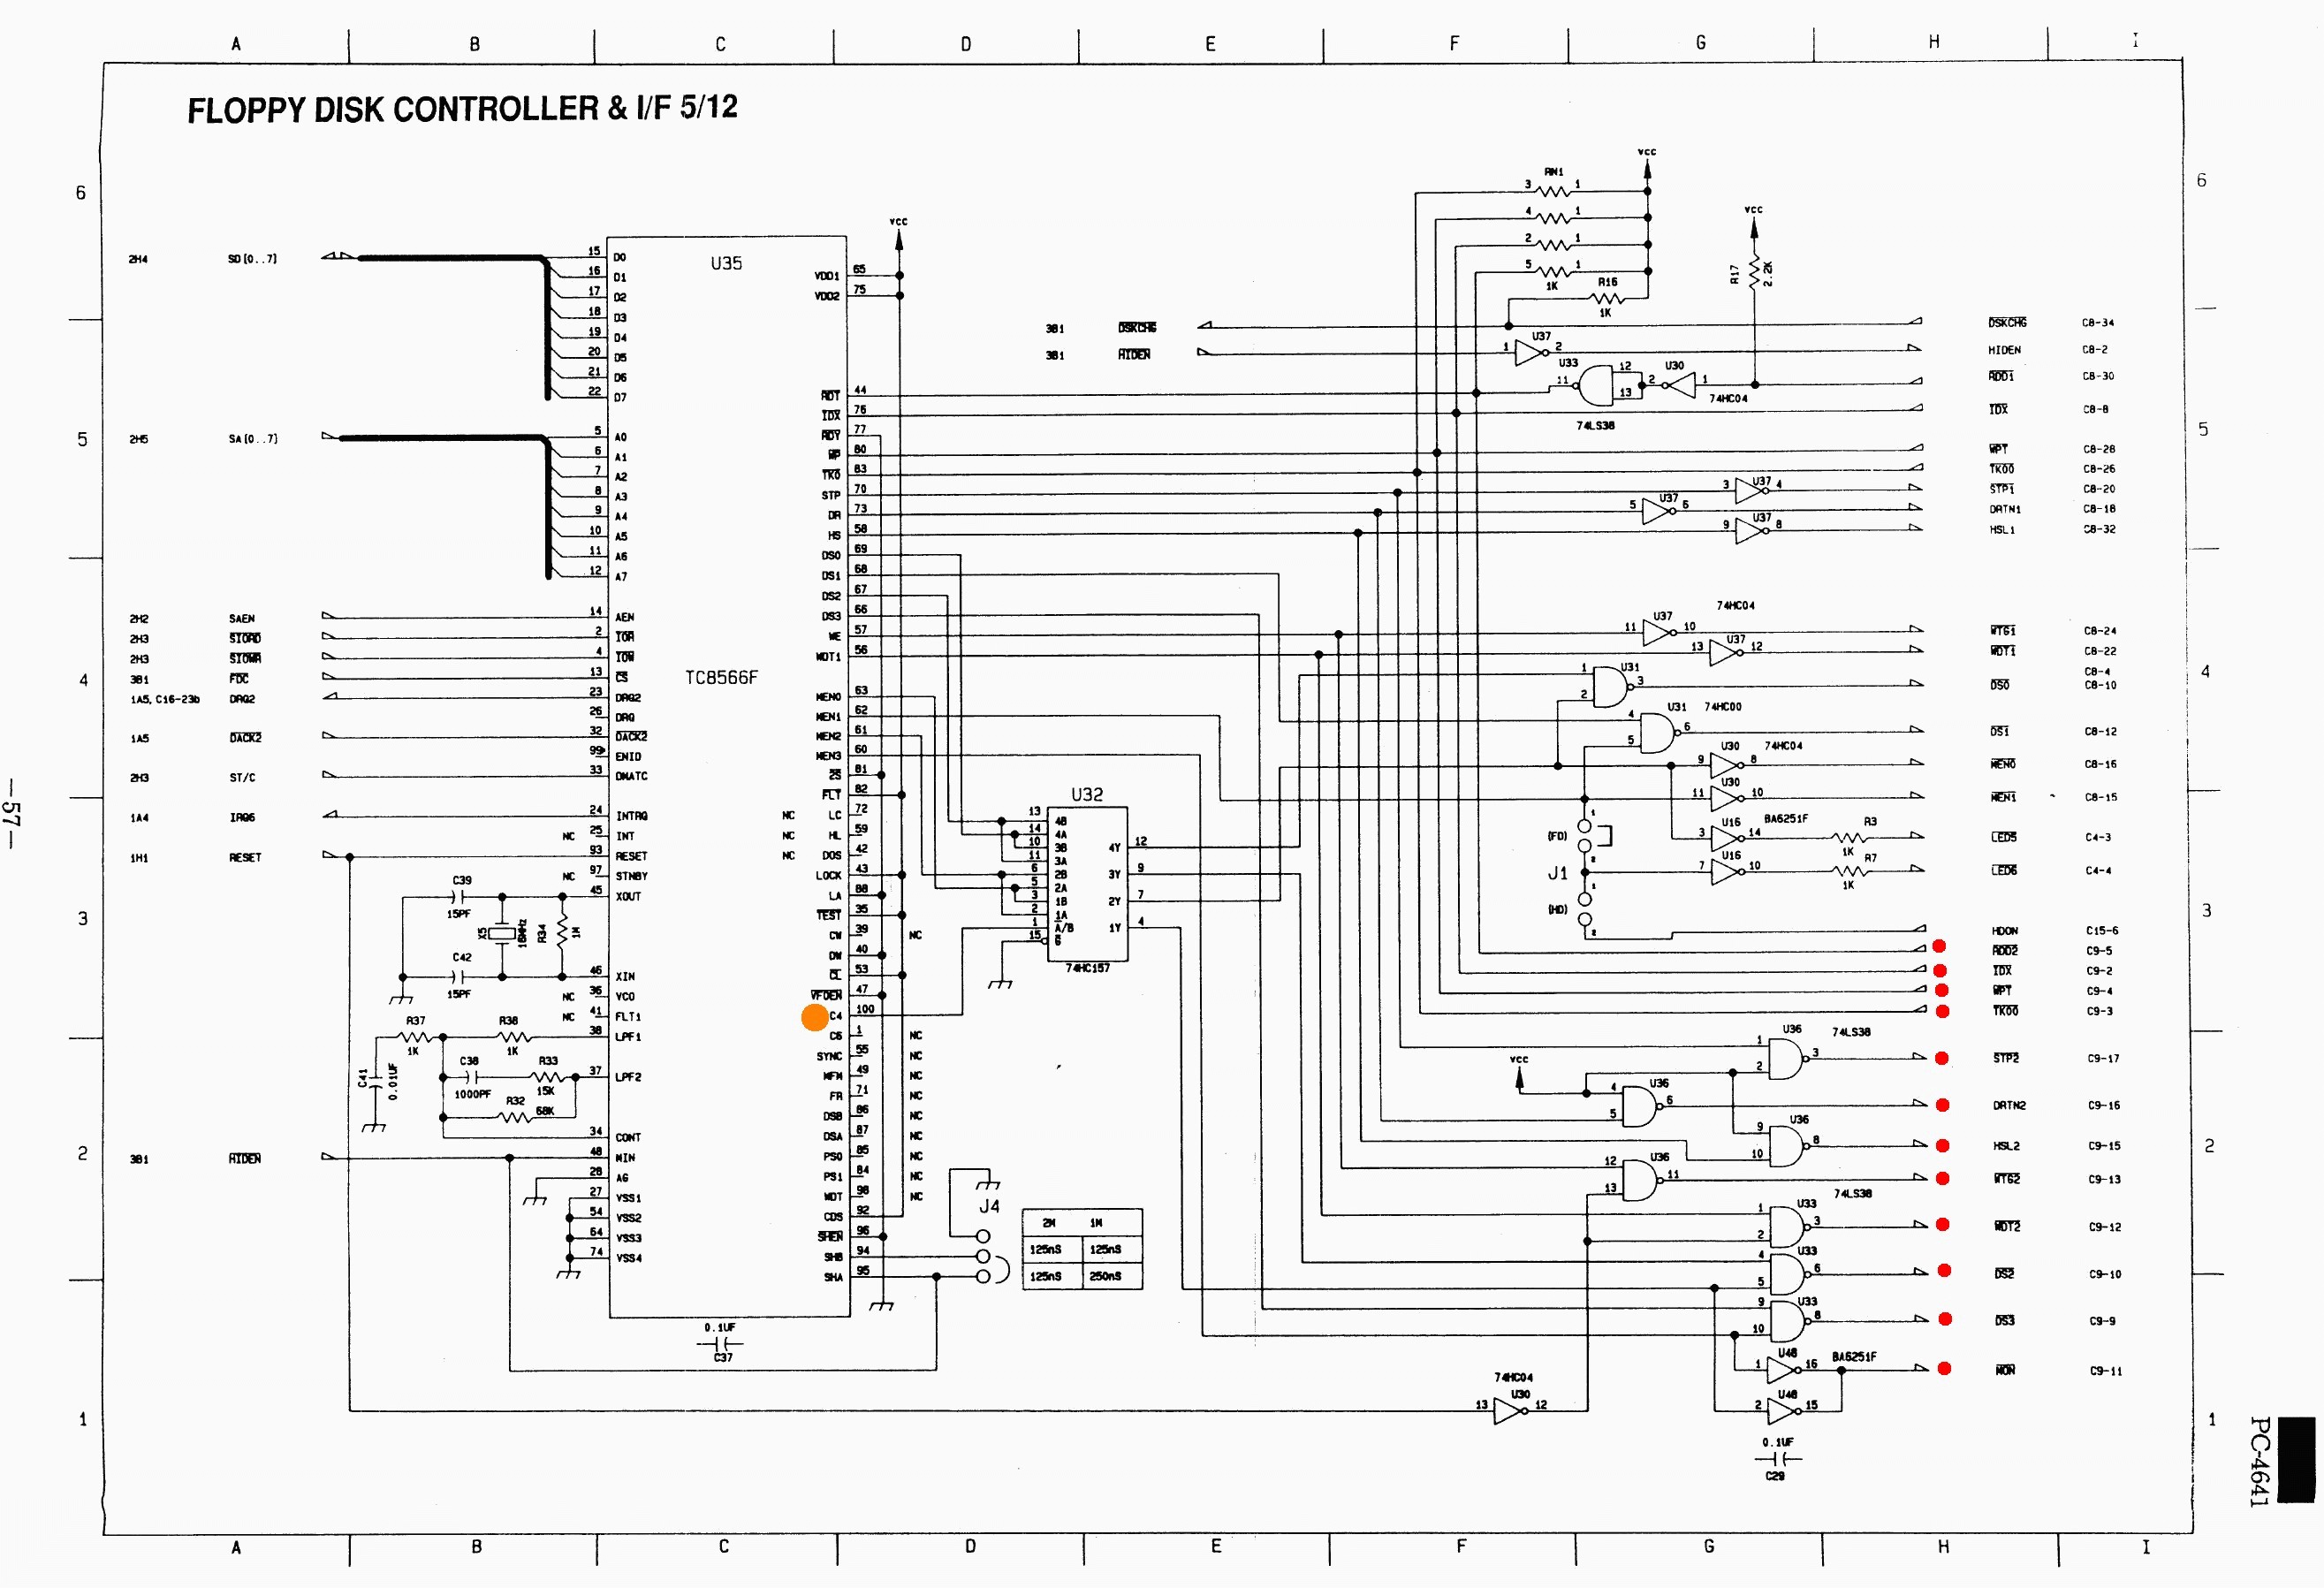 Sharp PC-4641 FDD Controller Schematic